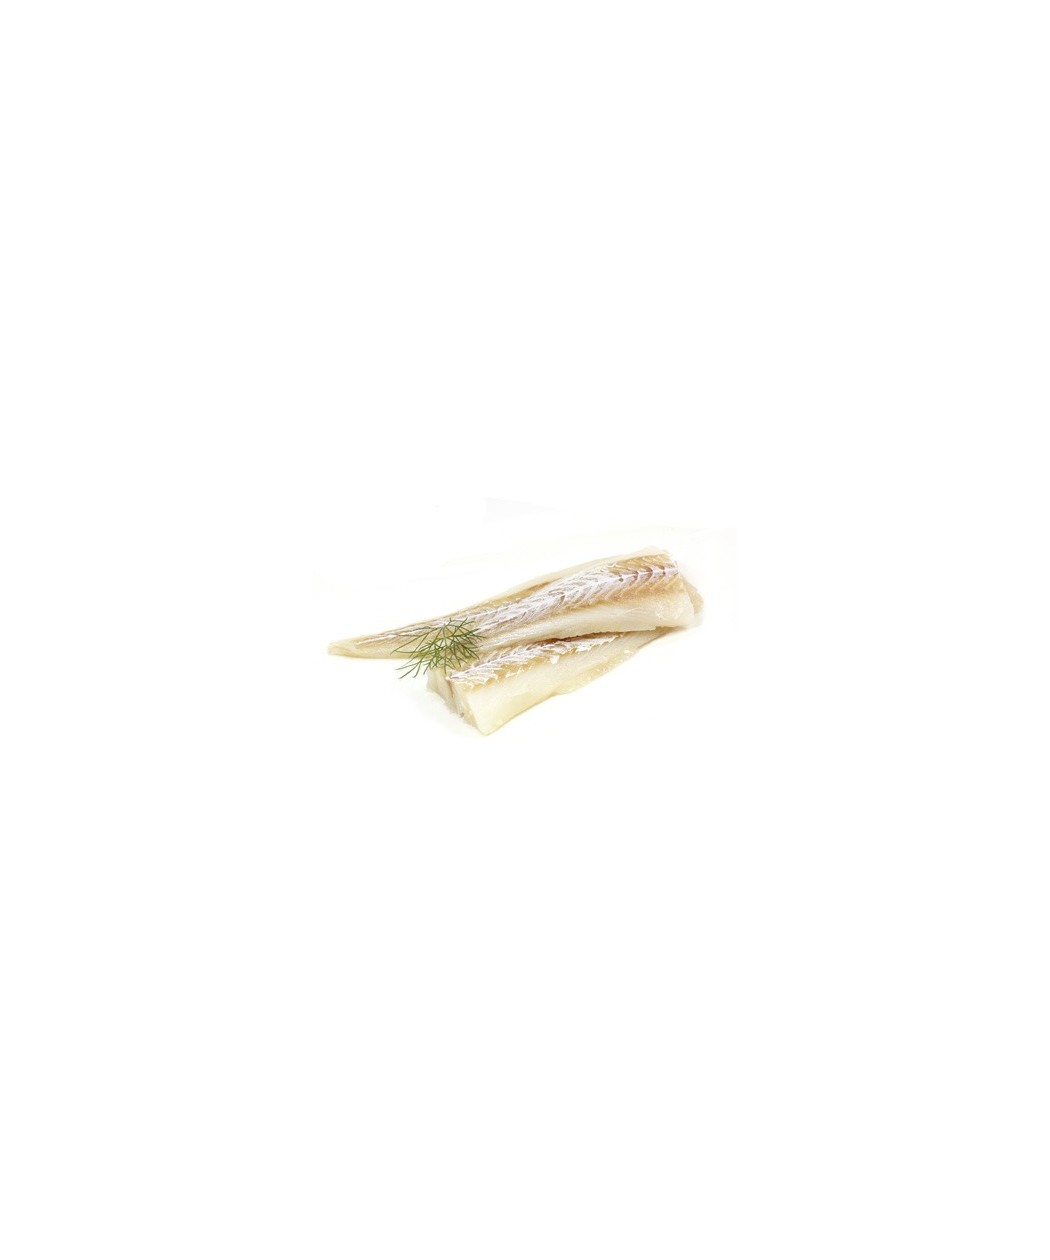 Filet de cabillaud lot de 1 kg (Gadus morhua)